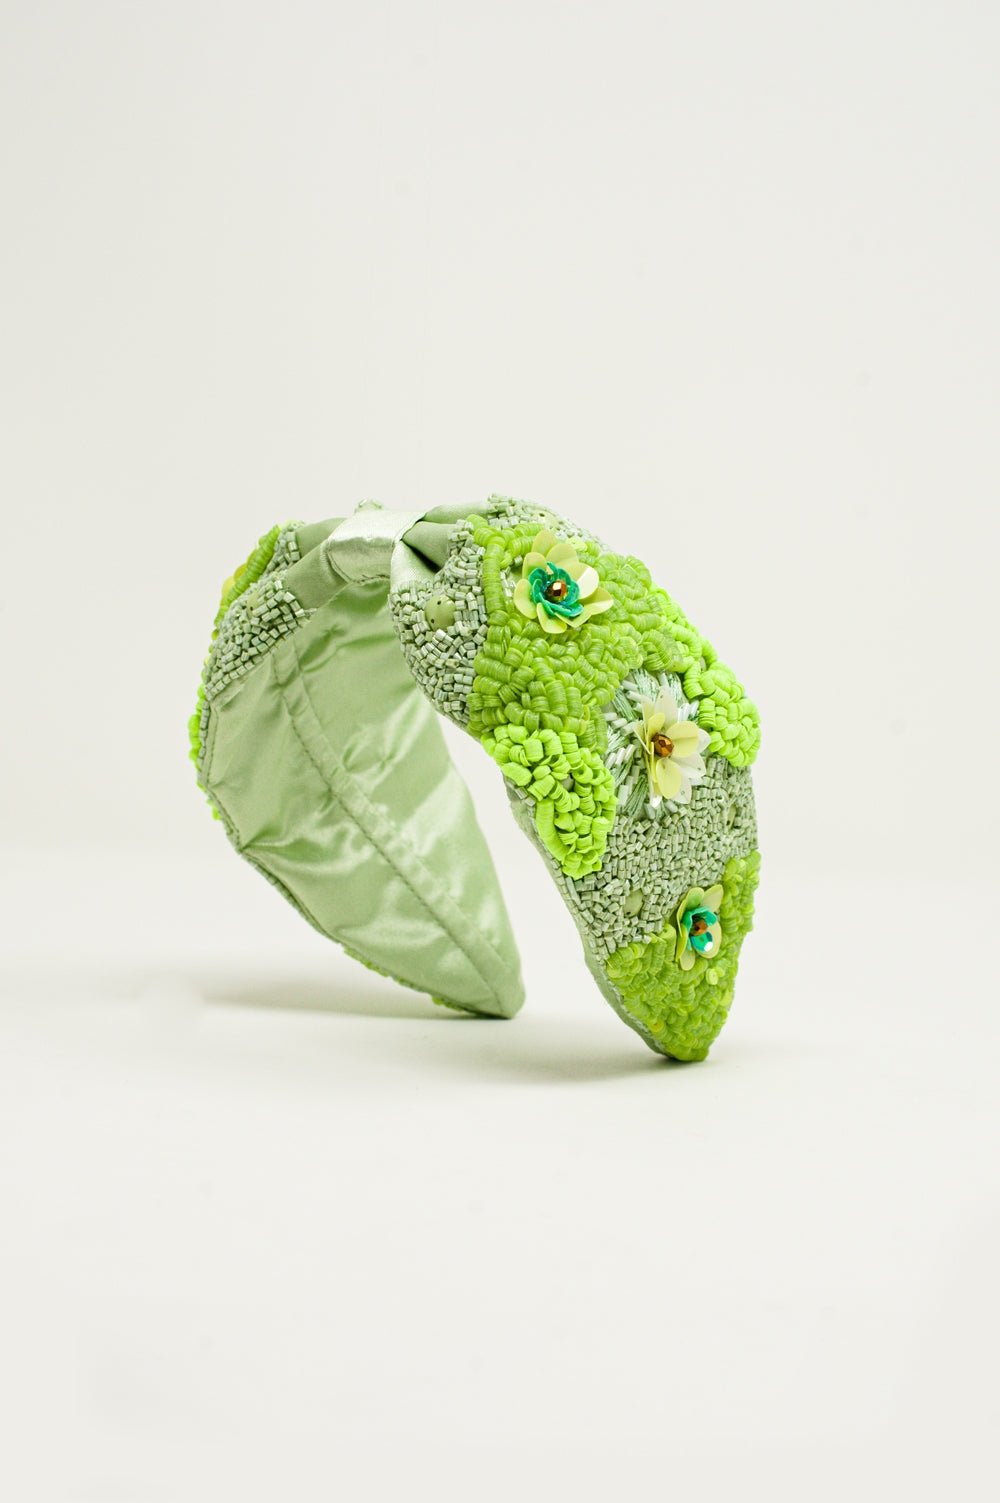 Chunky Headband With Embellished Green Flowers - Mack & Harvie